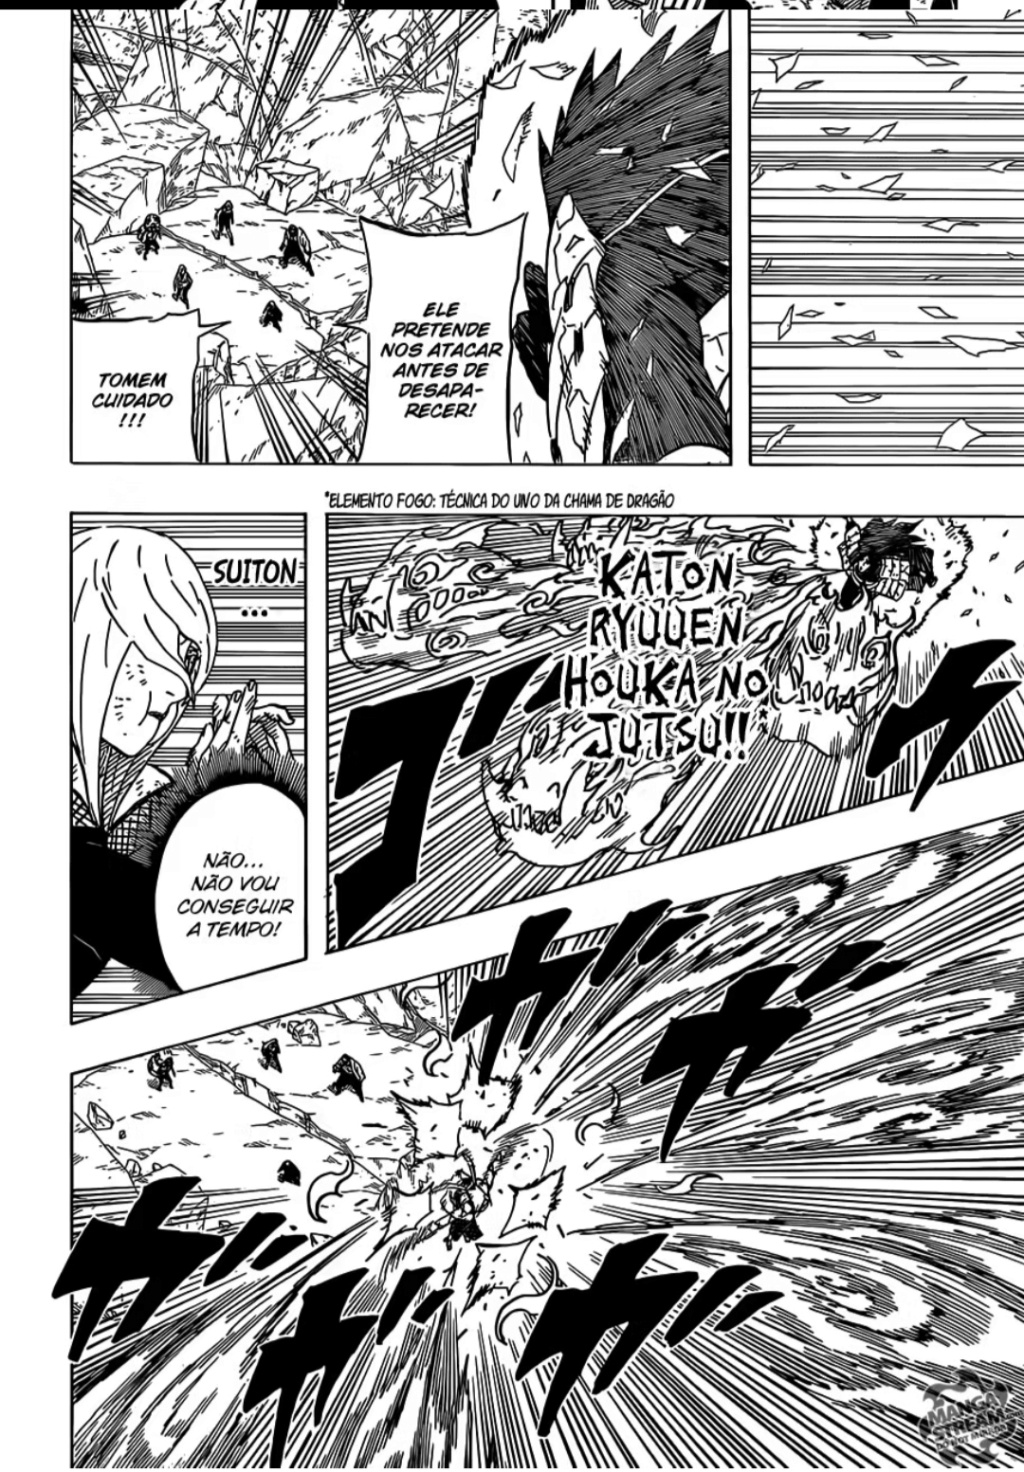 Naruto sem kurama vs tsunade  - Página 3 Img_2331